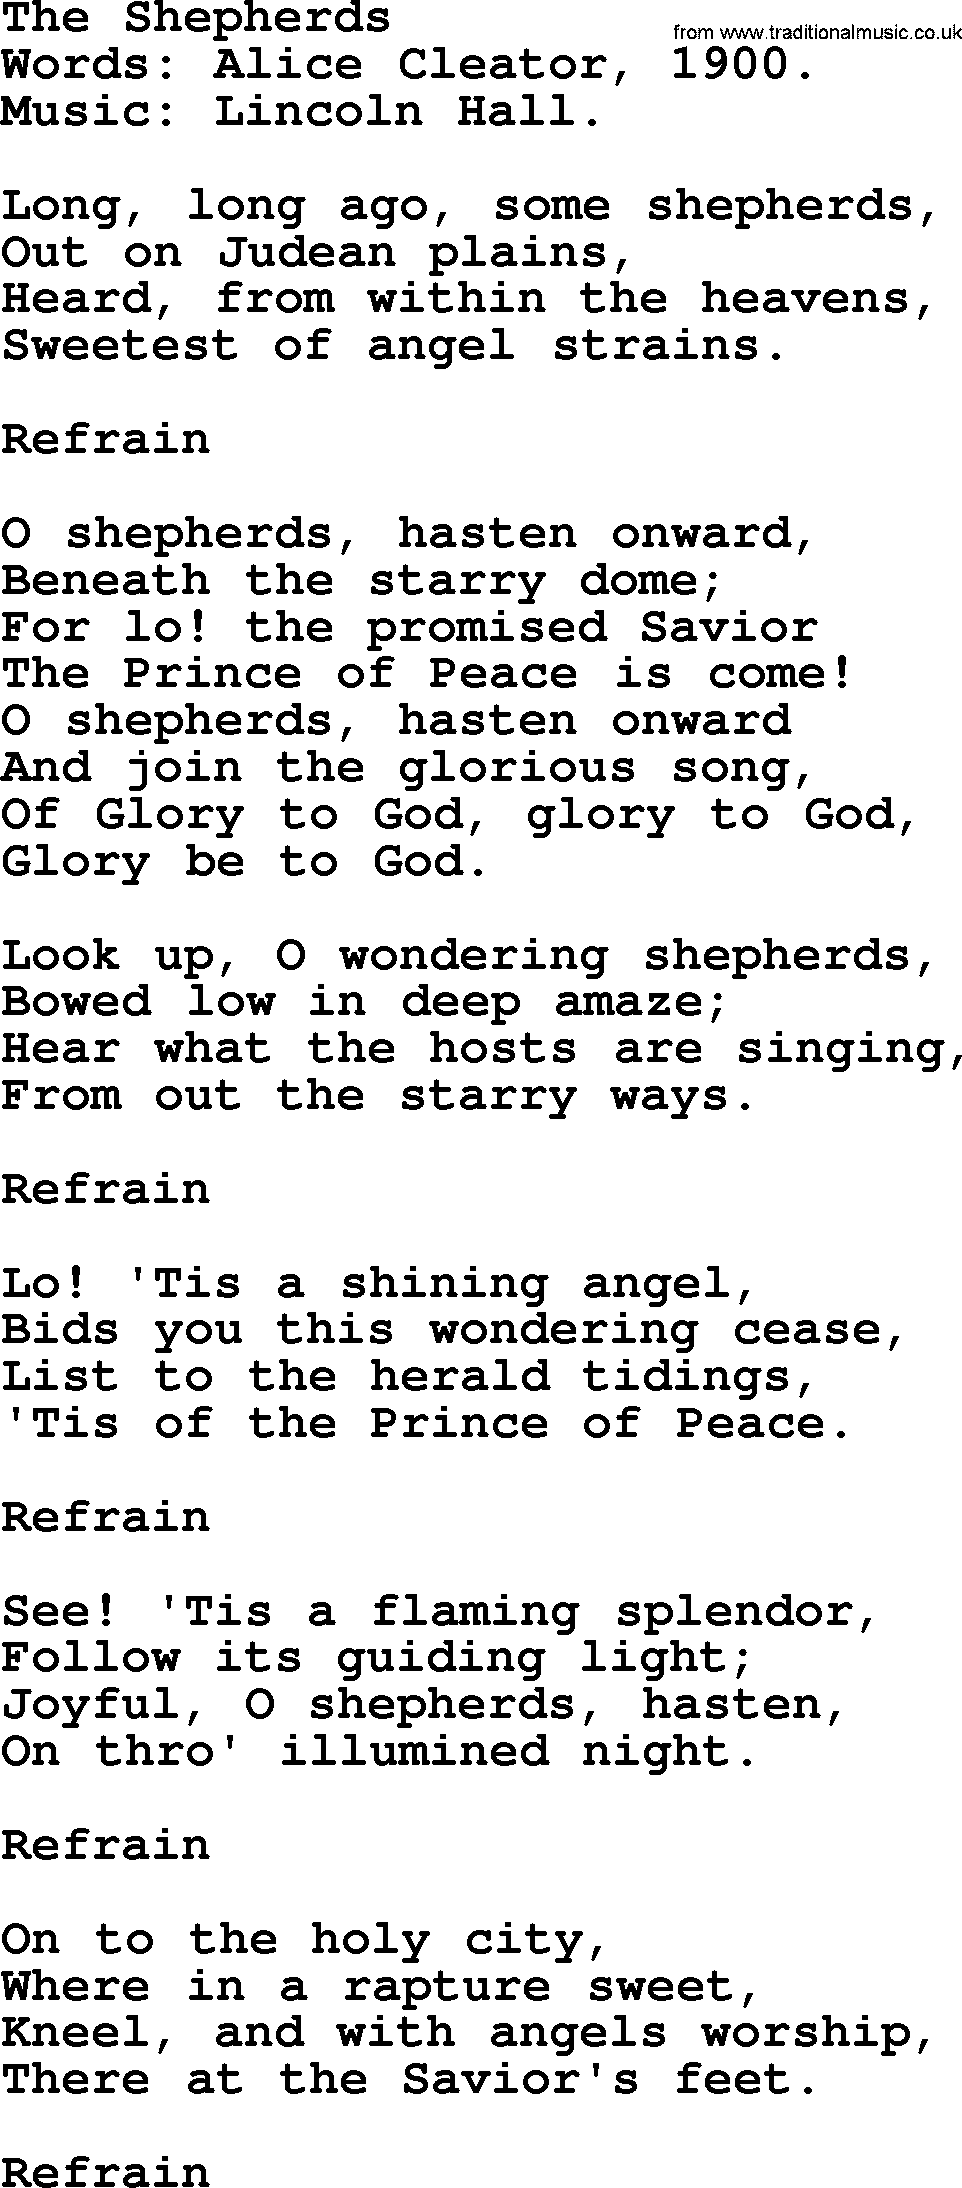 Christmas Hymns, Carols and Songs, title: The Shepherds, lyrics with PDF